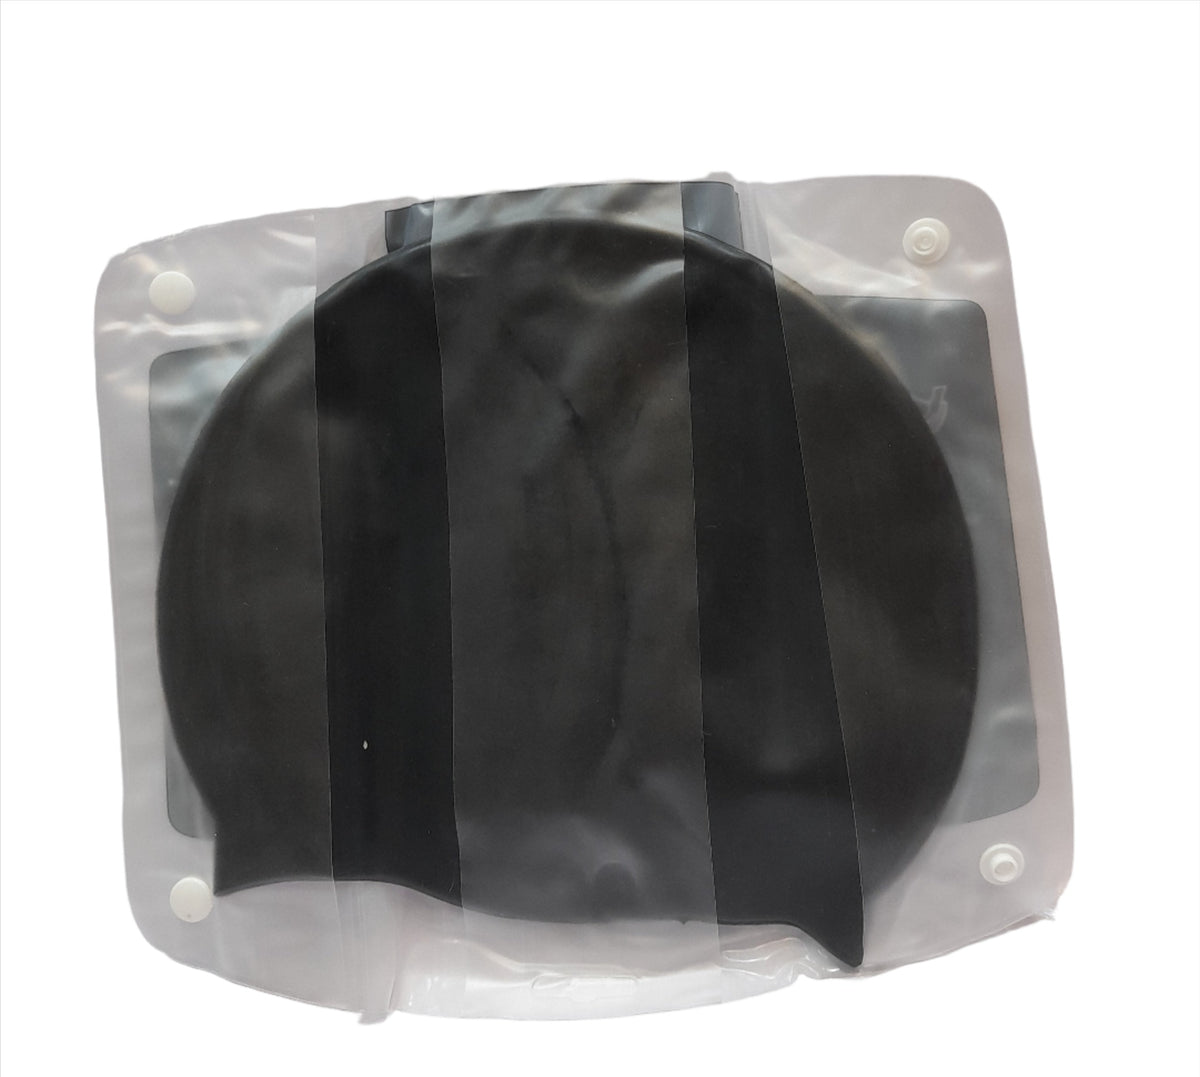 VIVA Swimming Silicone Cap 3-Fold Bag